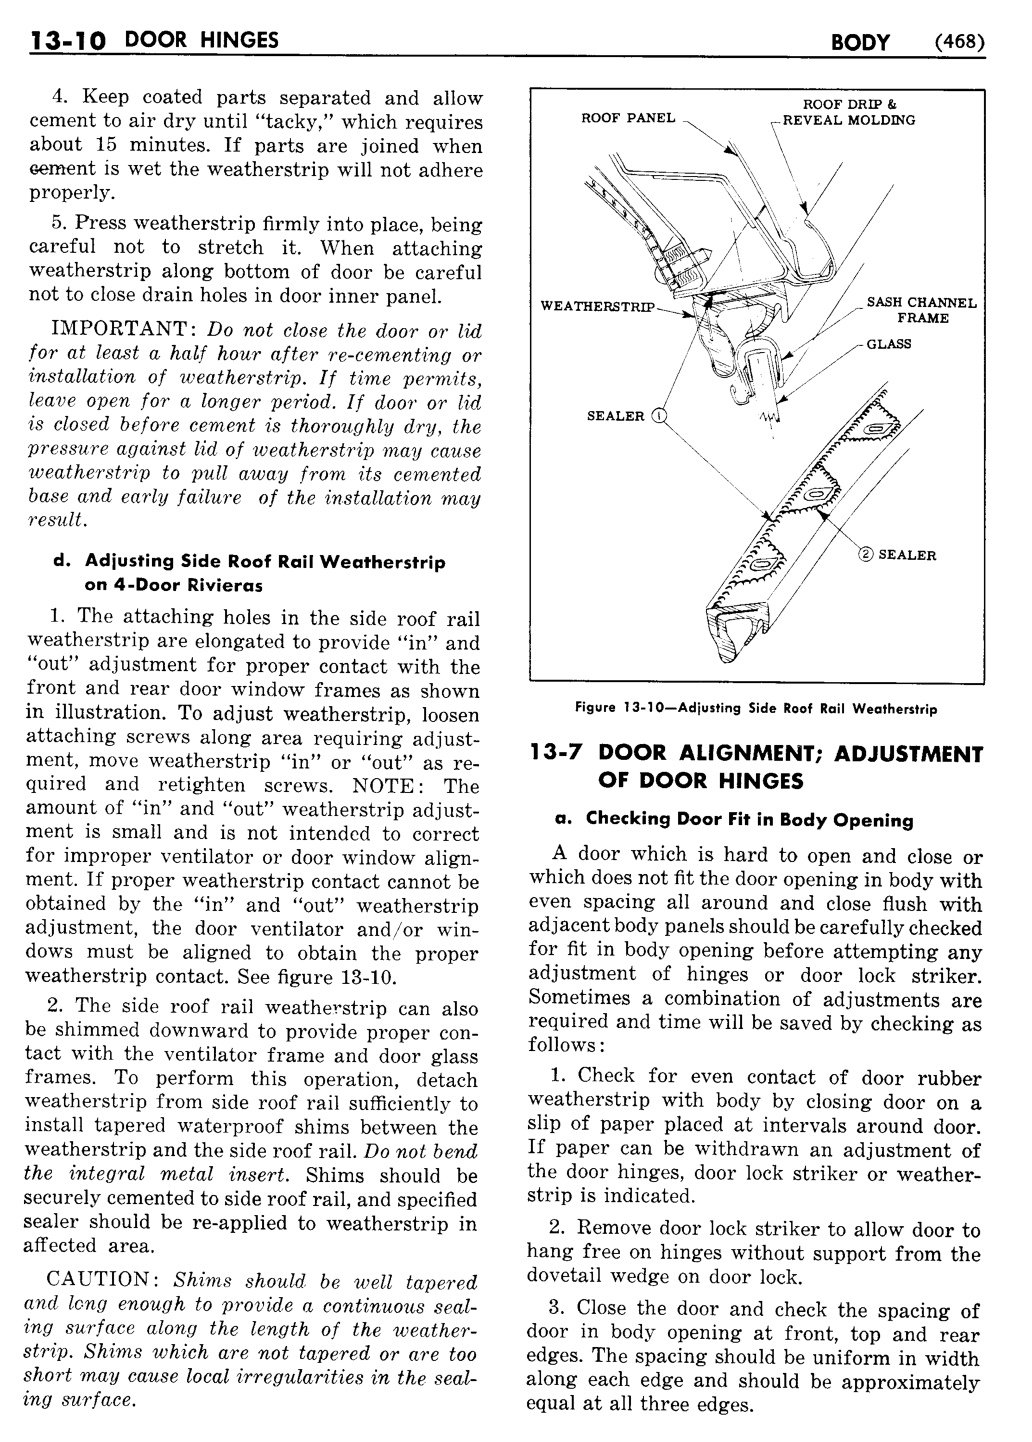 n_14 1956 Buick Shop Manual - Body-010-010.jpg